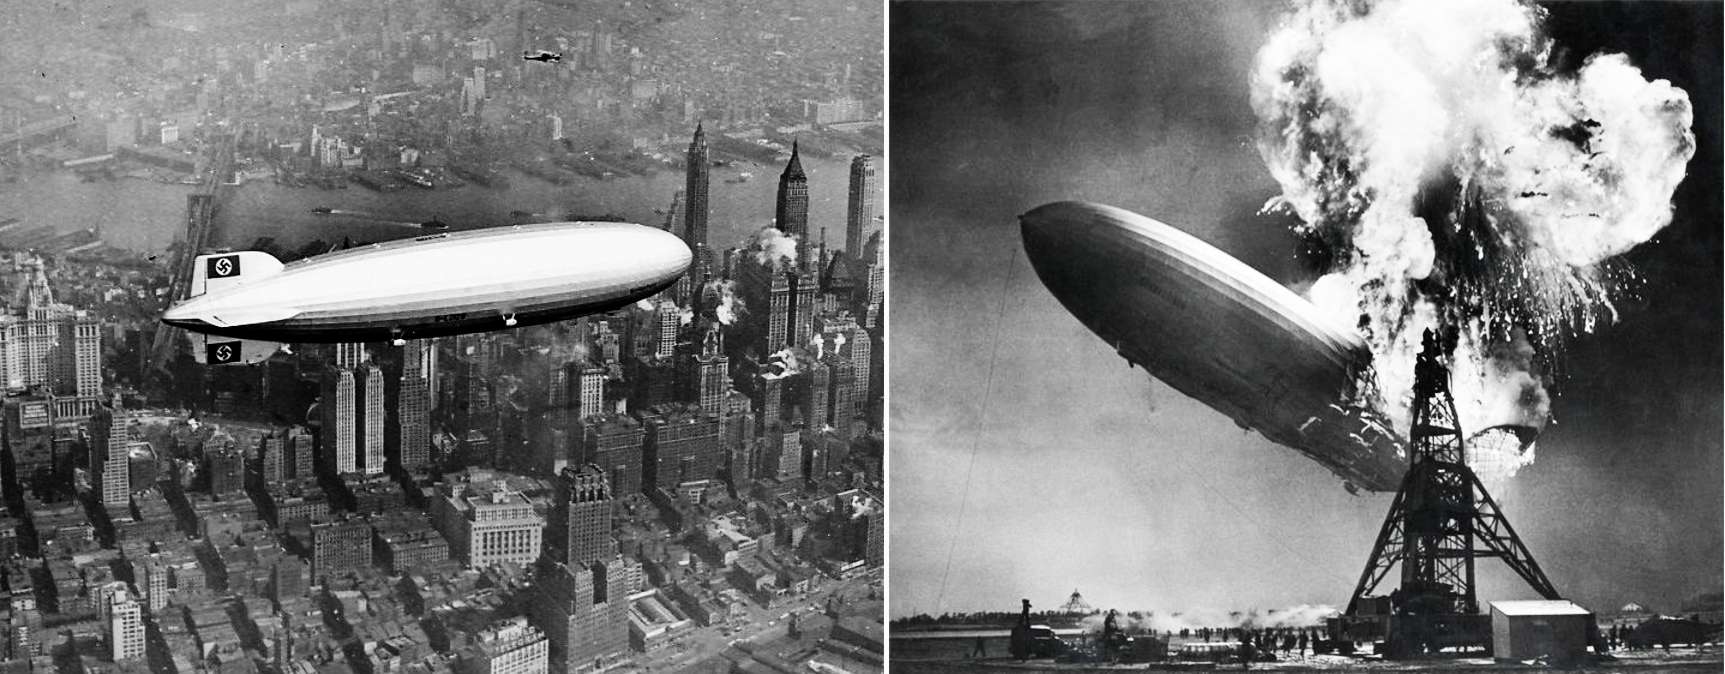 Hindenburg over New York 1937 disaster